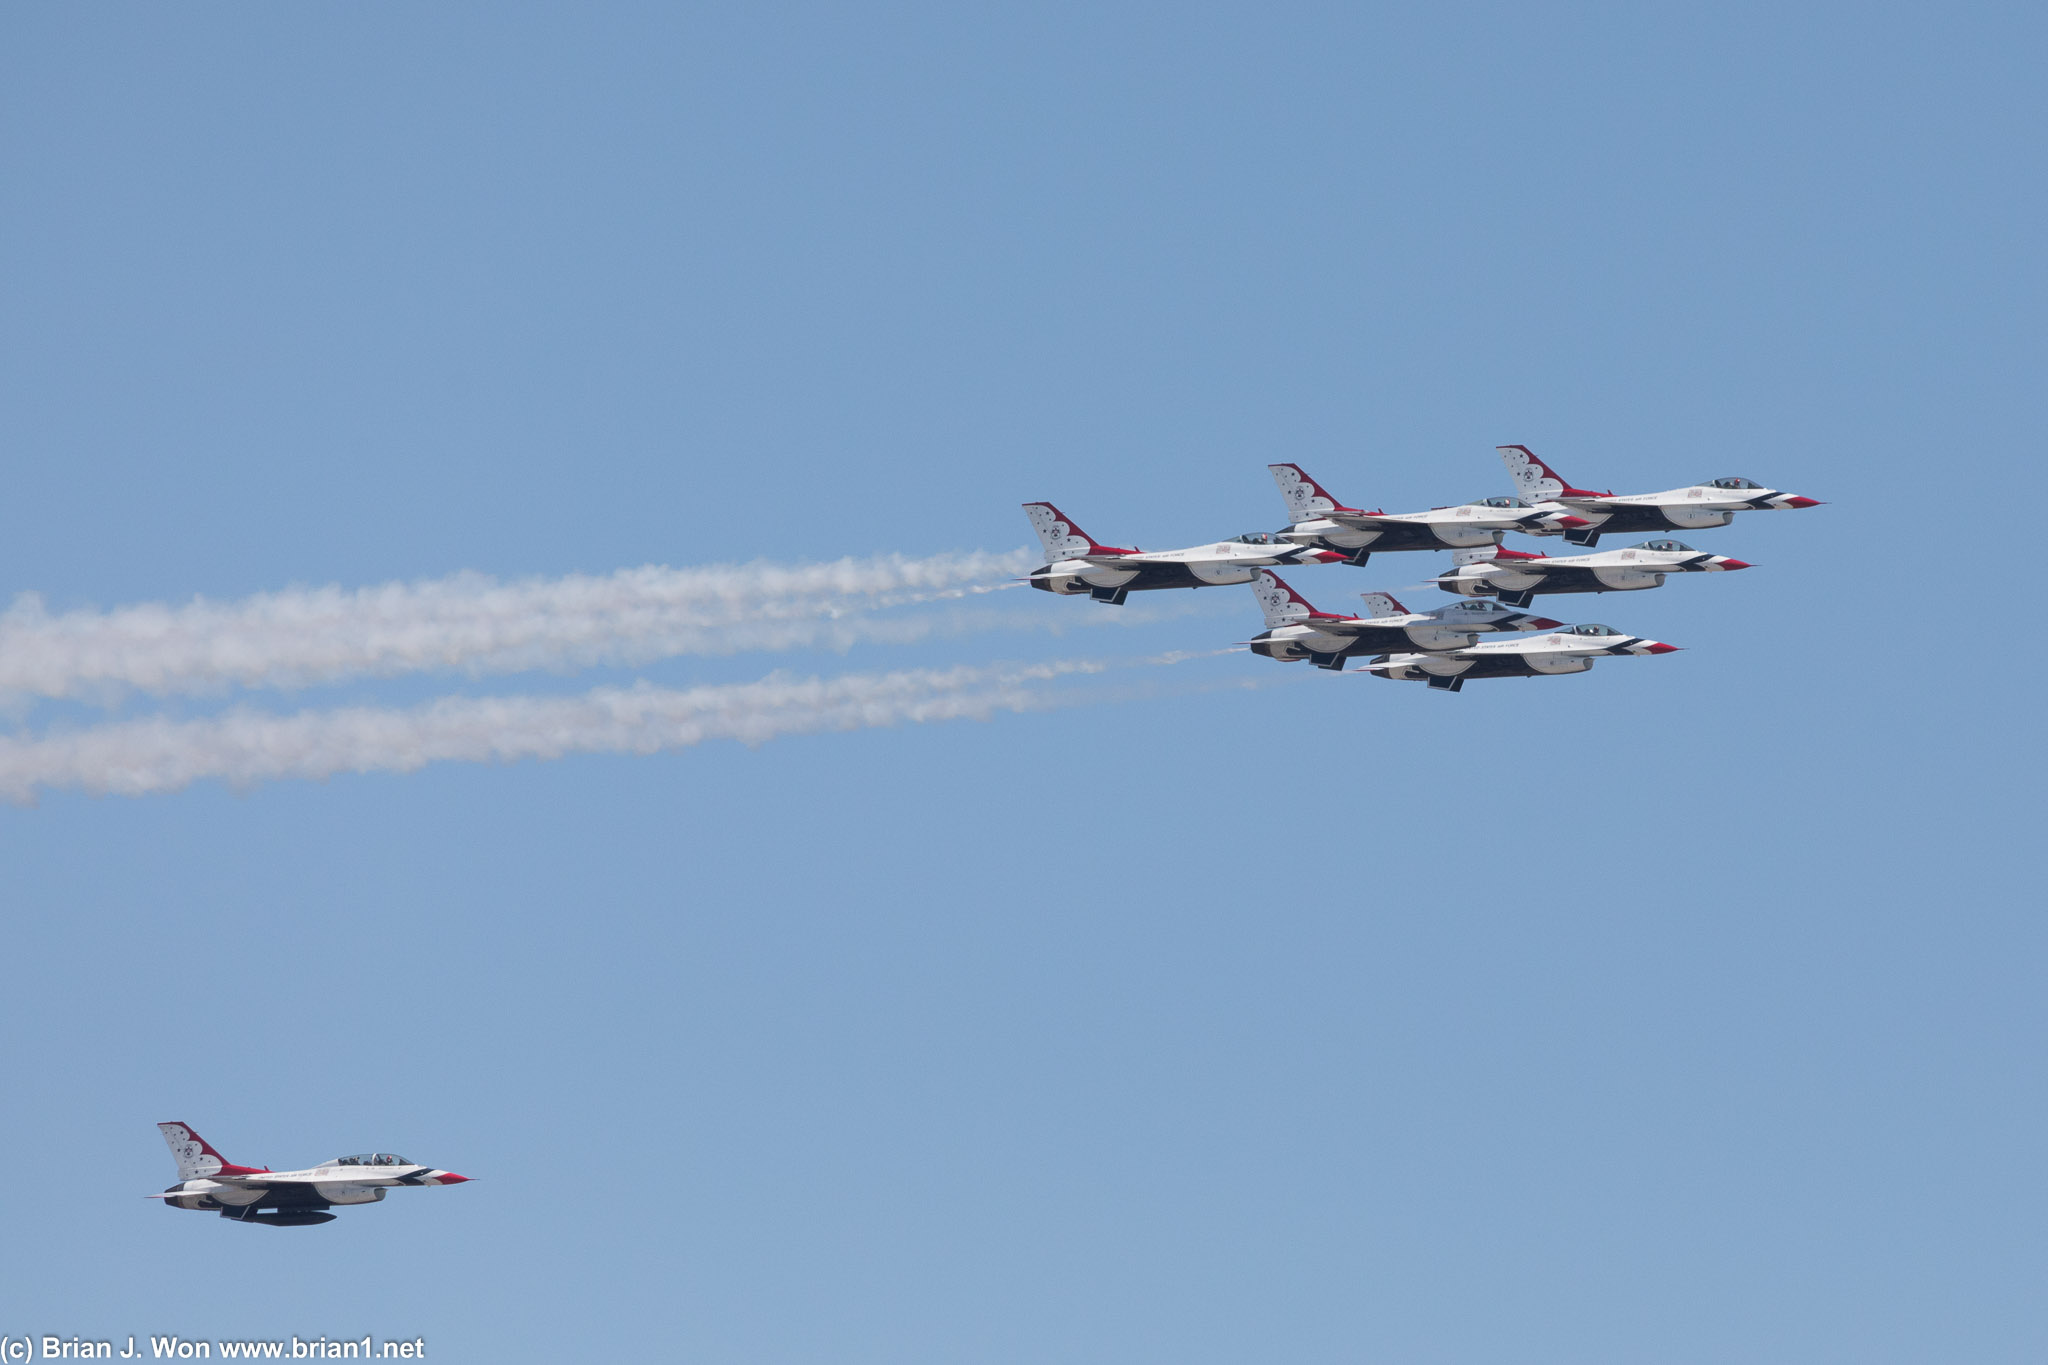 And the USAF Thunderbirds arrive!